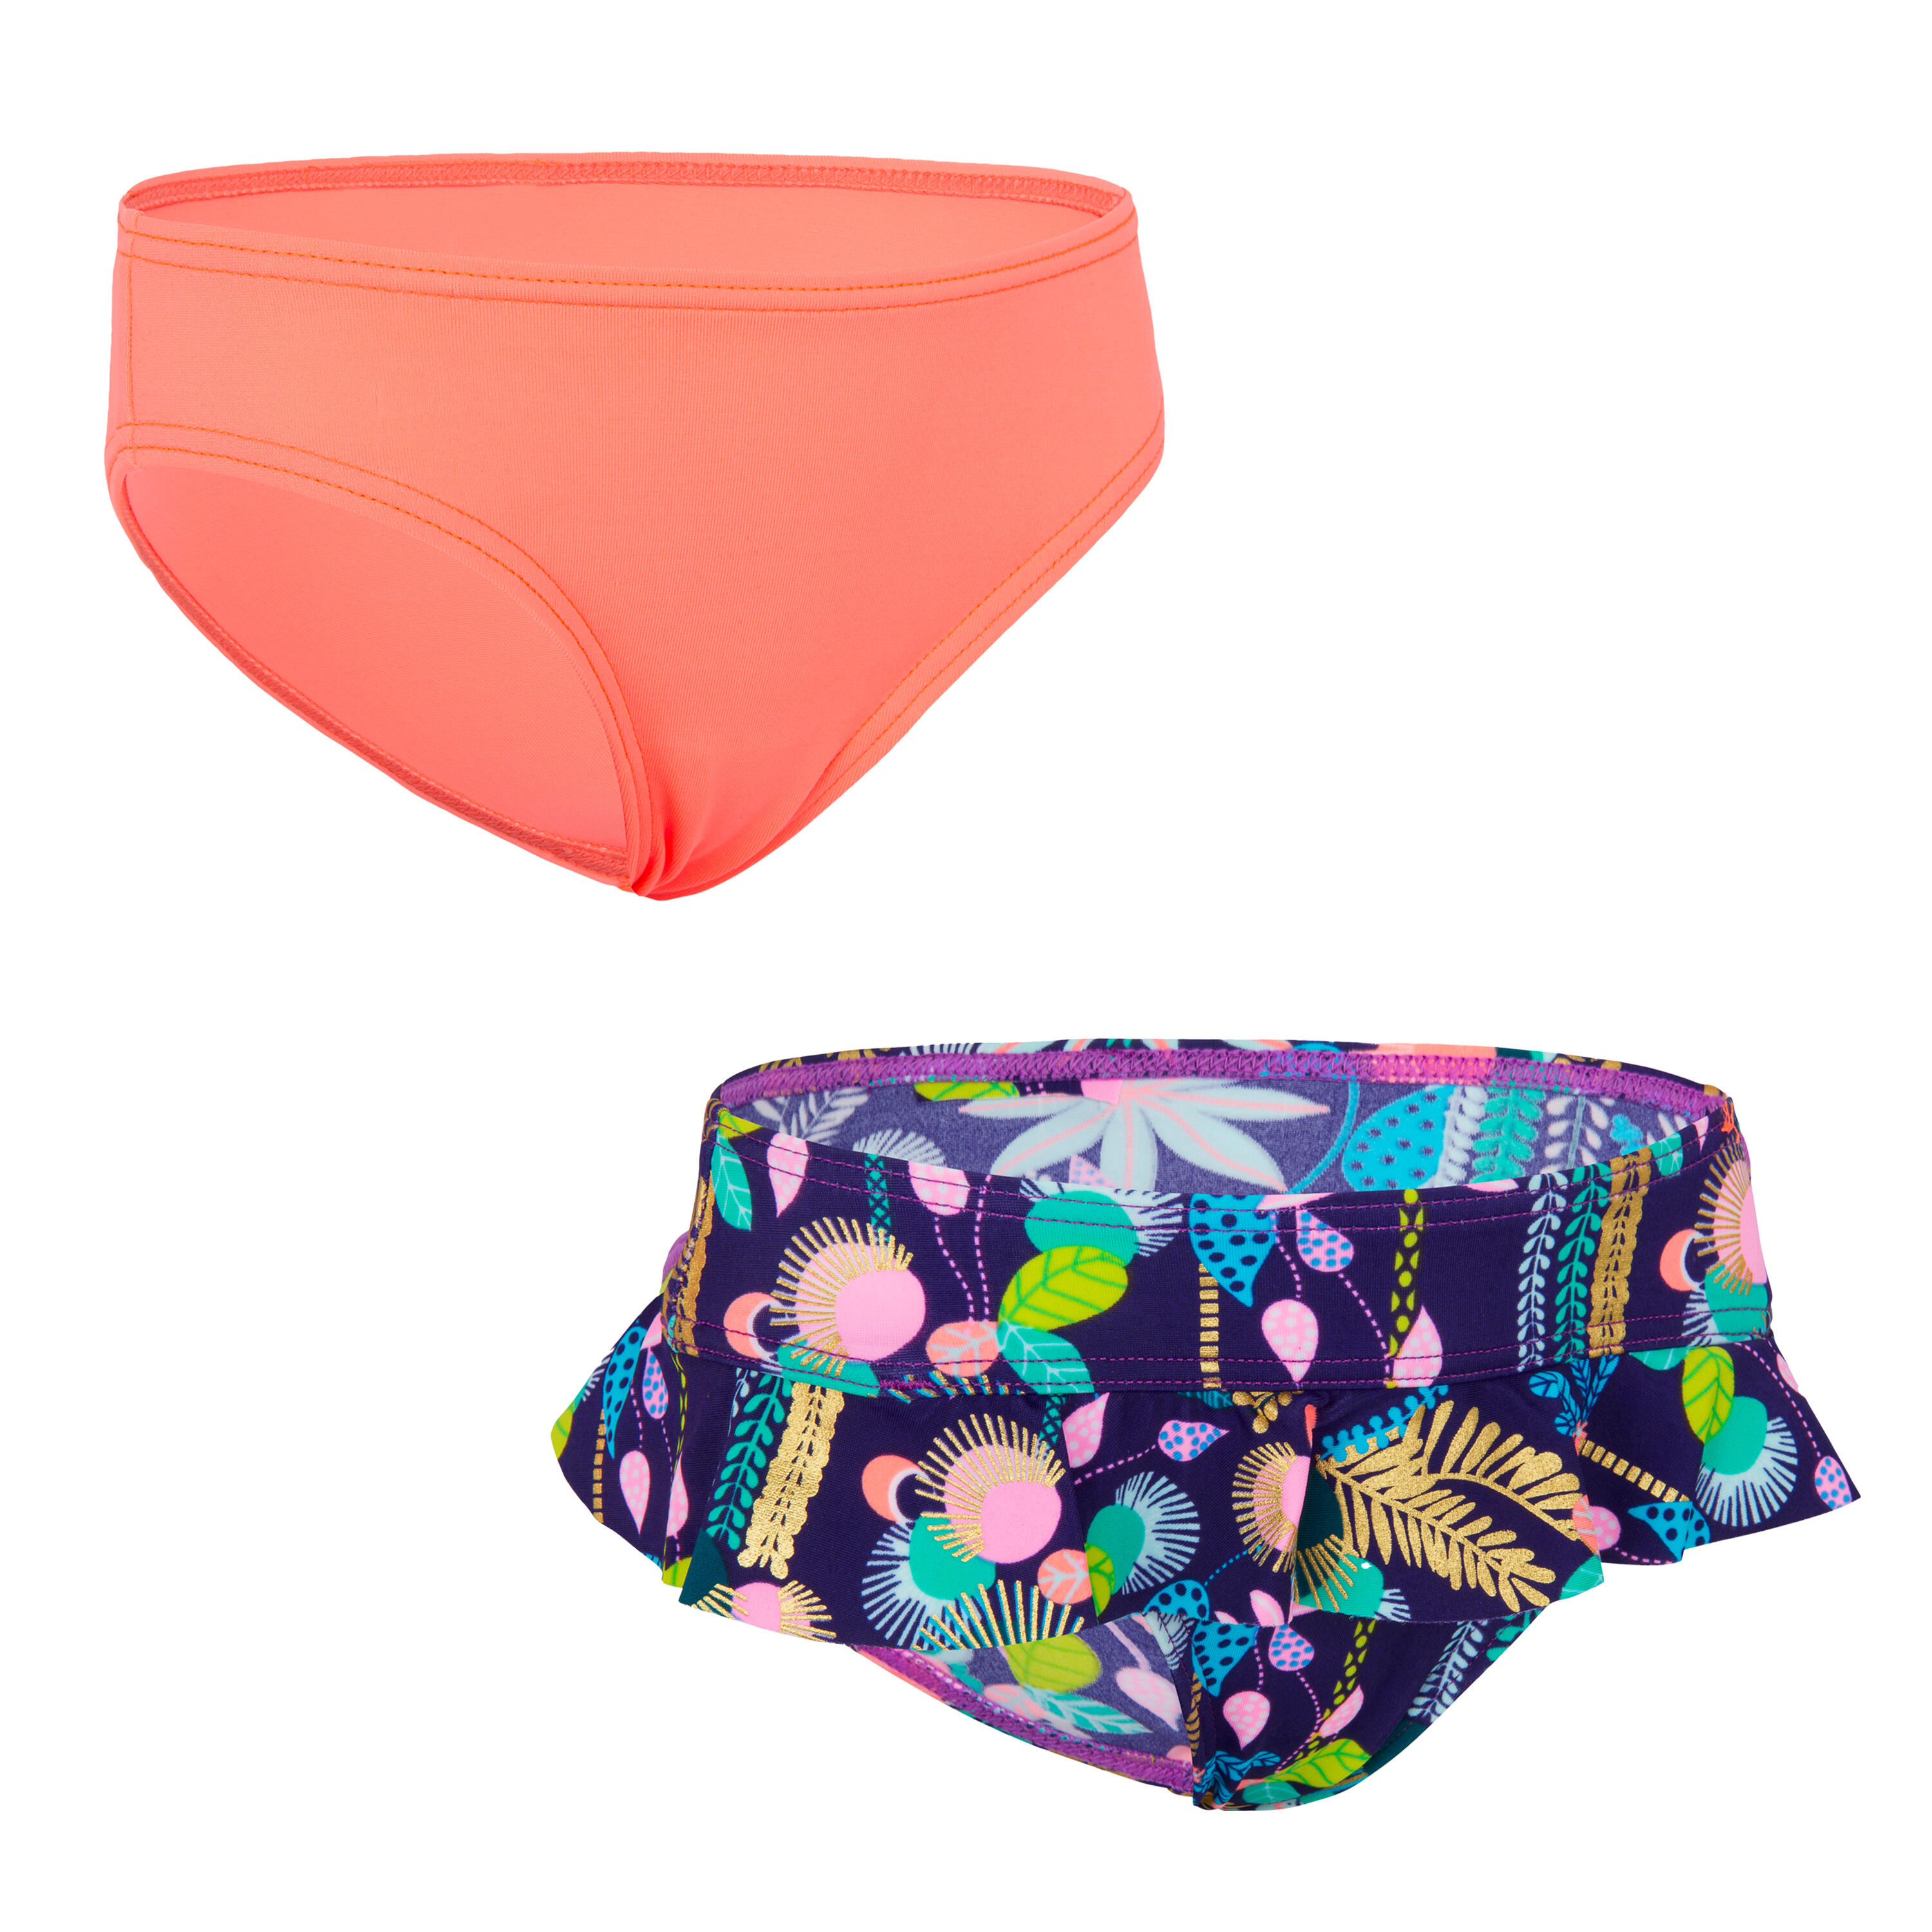 OLAIAN Bikini-Hose Bottom Madi LG100 Mädchen 2 Stück koralle Gr. 116 - 6 Jahre